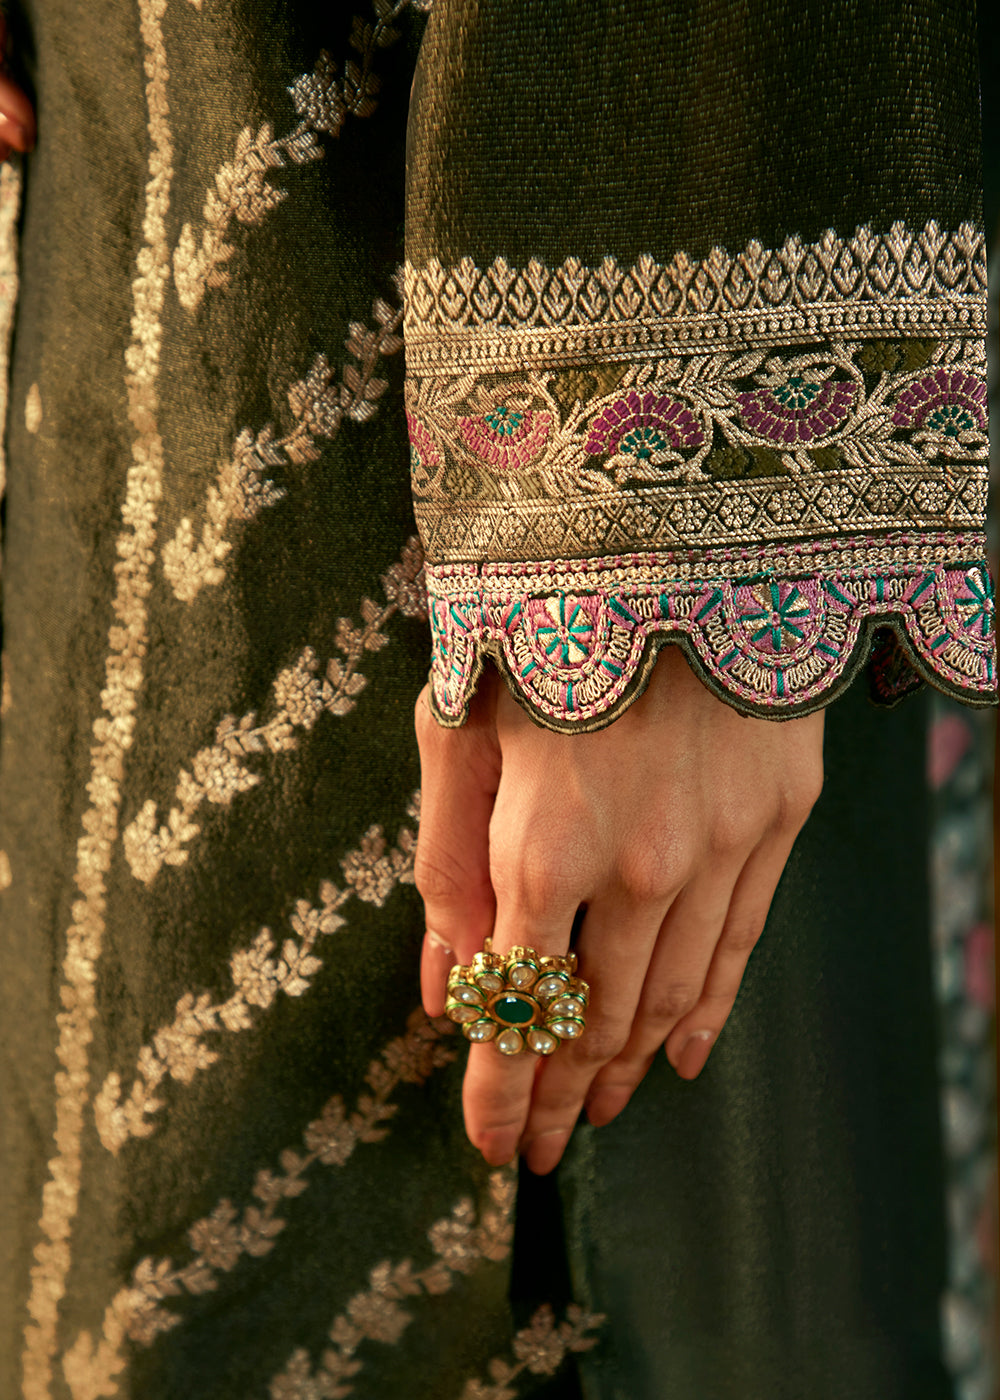 Buy Now Dark Green Pure Zari Banarasi Tissue Festive Wear Salwar Suit Online in USA, UK, Canada, Germany, Australia & Worldwide at Empress Clothing.